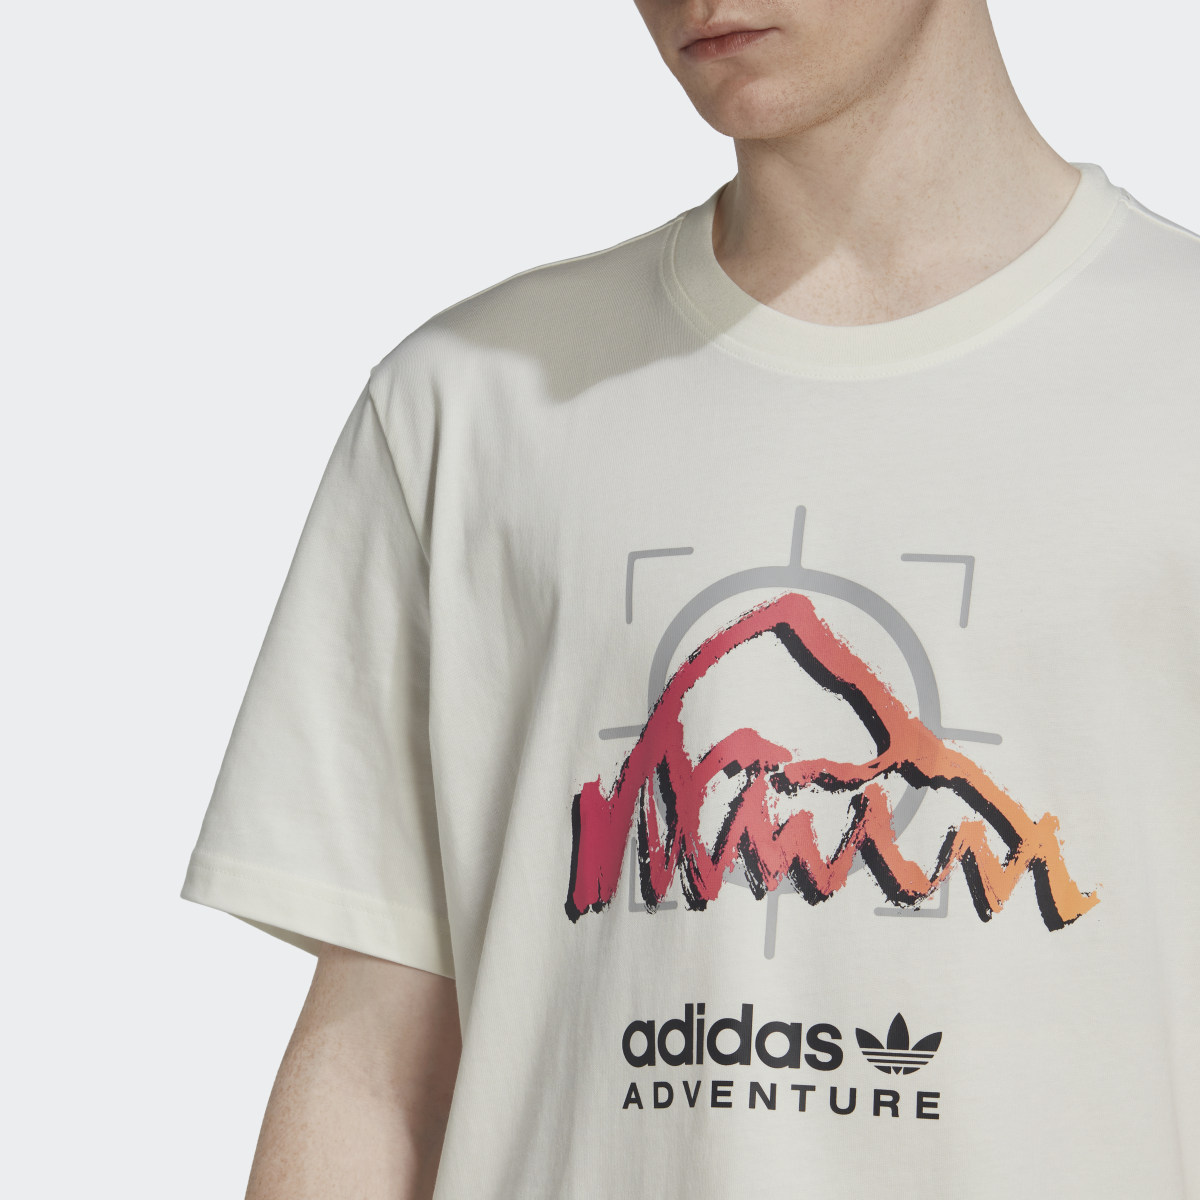 Adidas Adventure Ride T-Shirt. 6